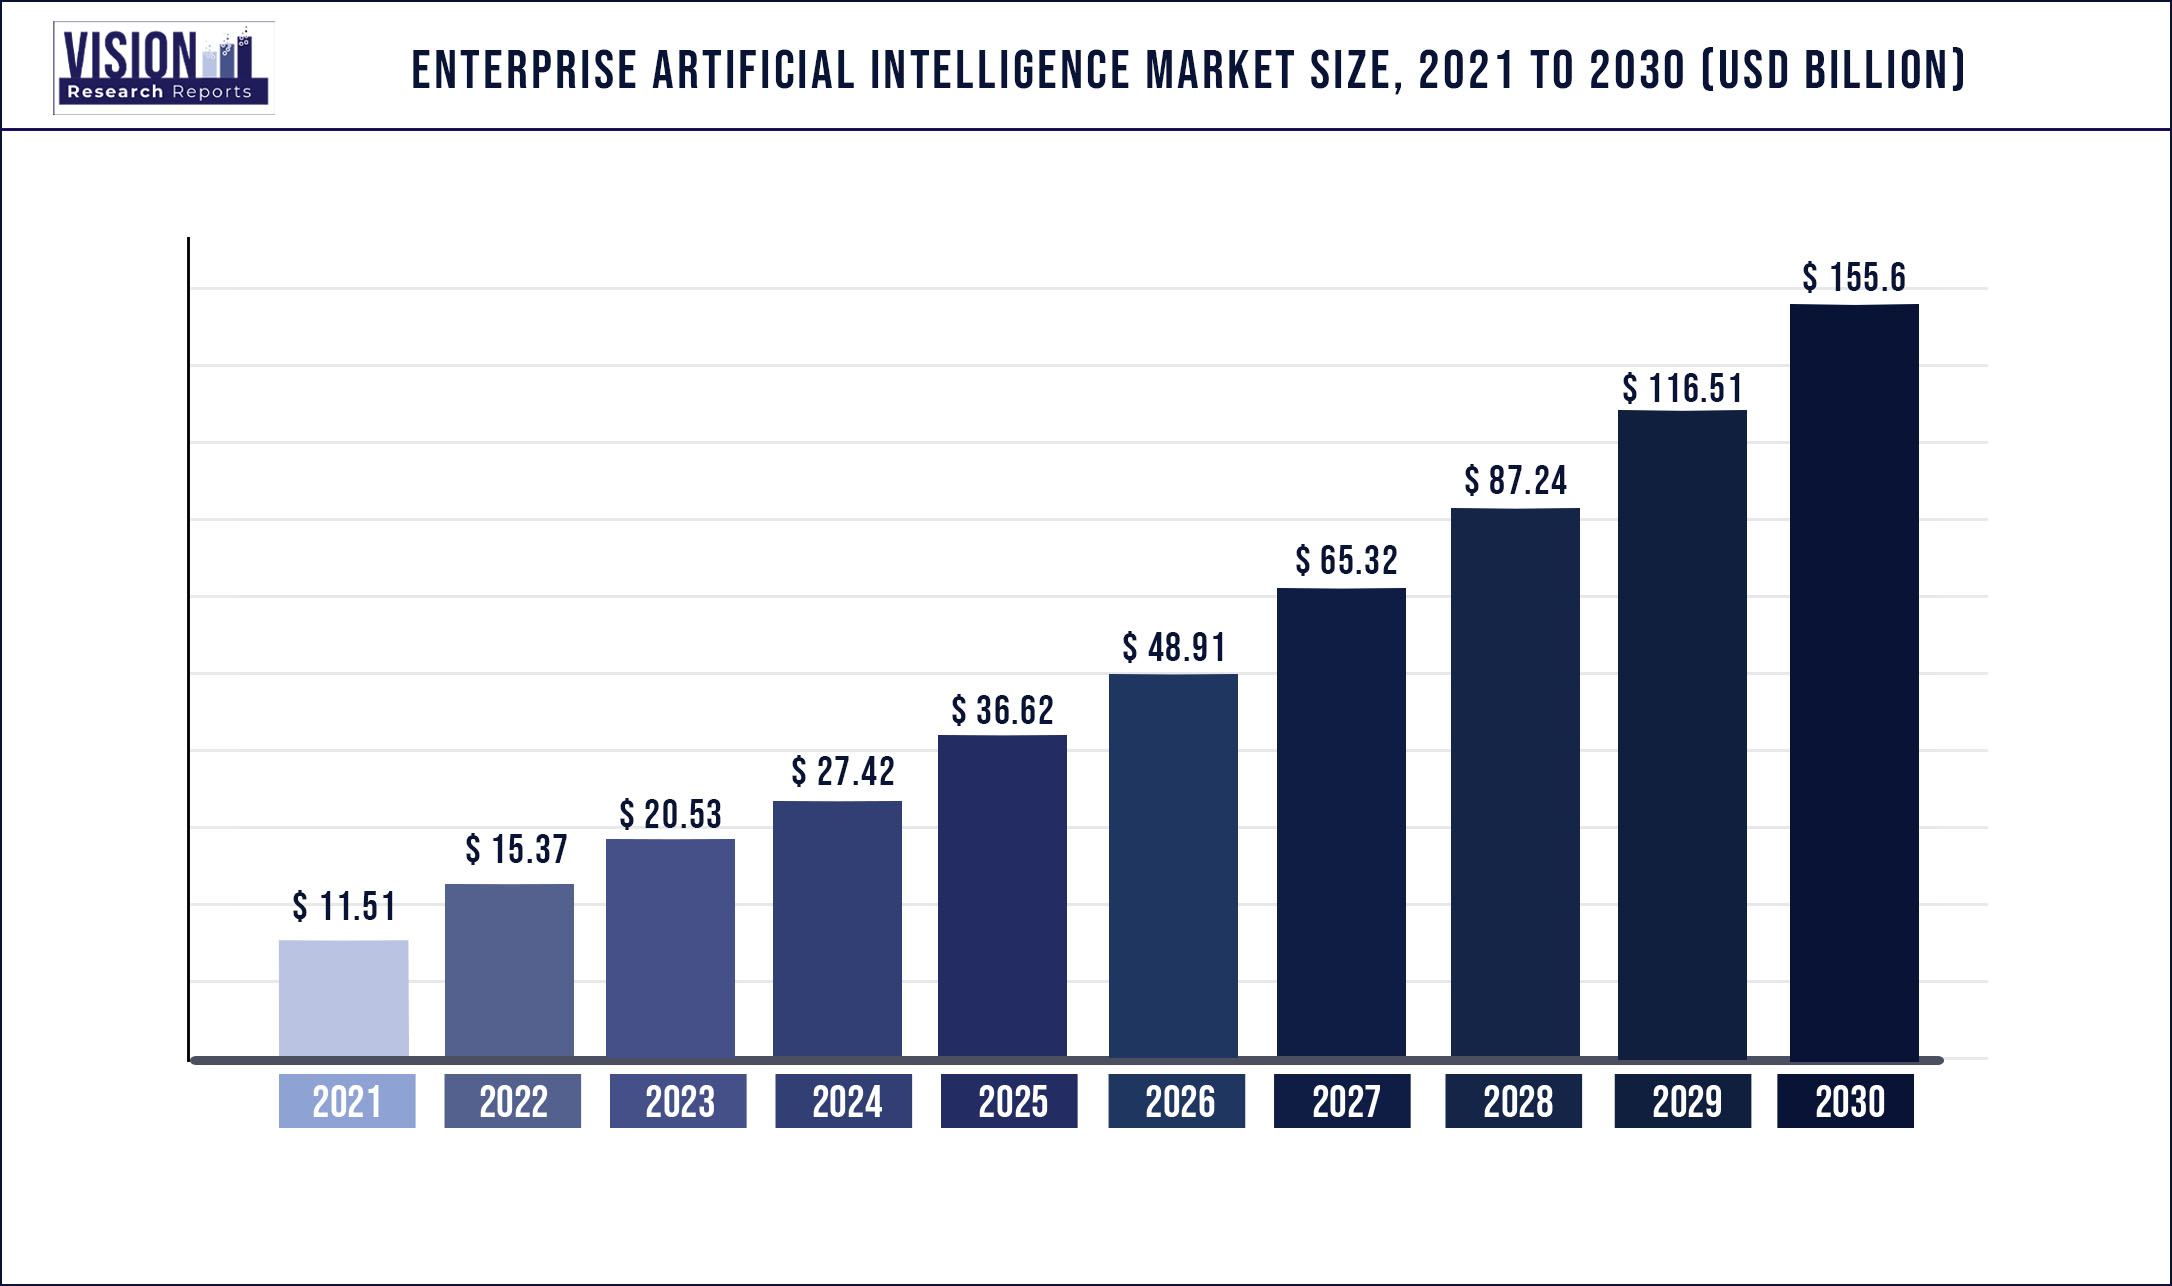 Enterprise Artificial Intelligence Market Size 2021 to 2030